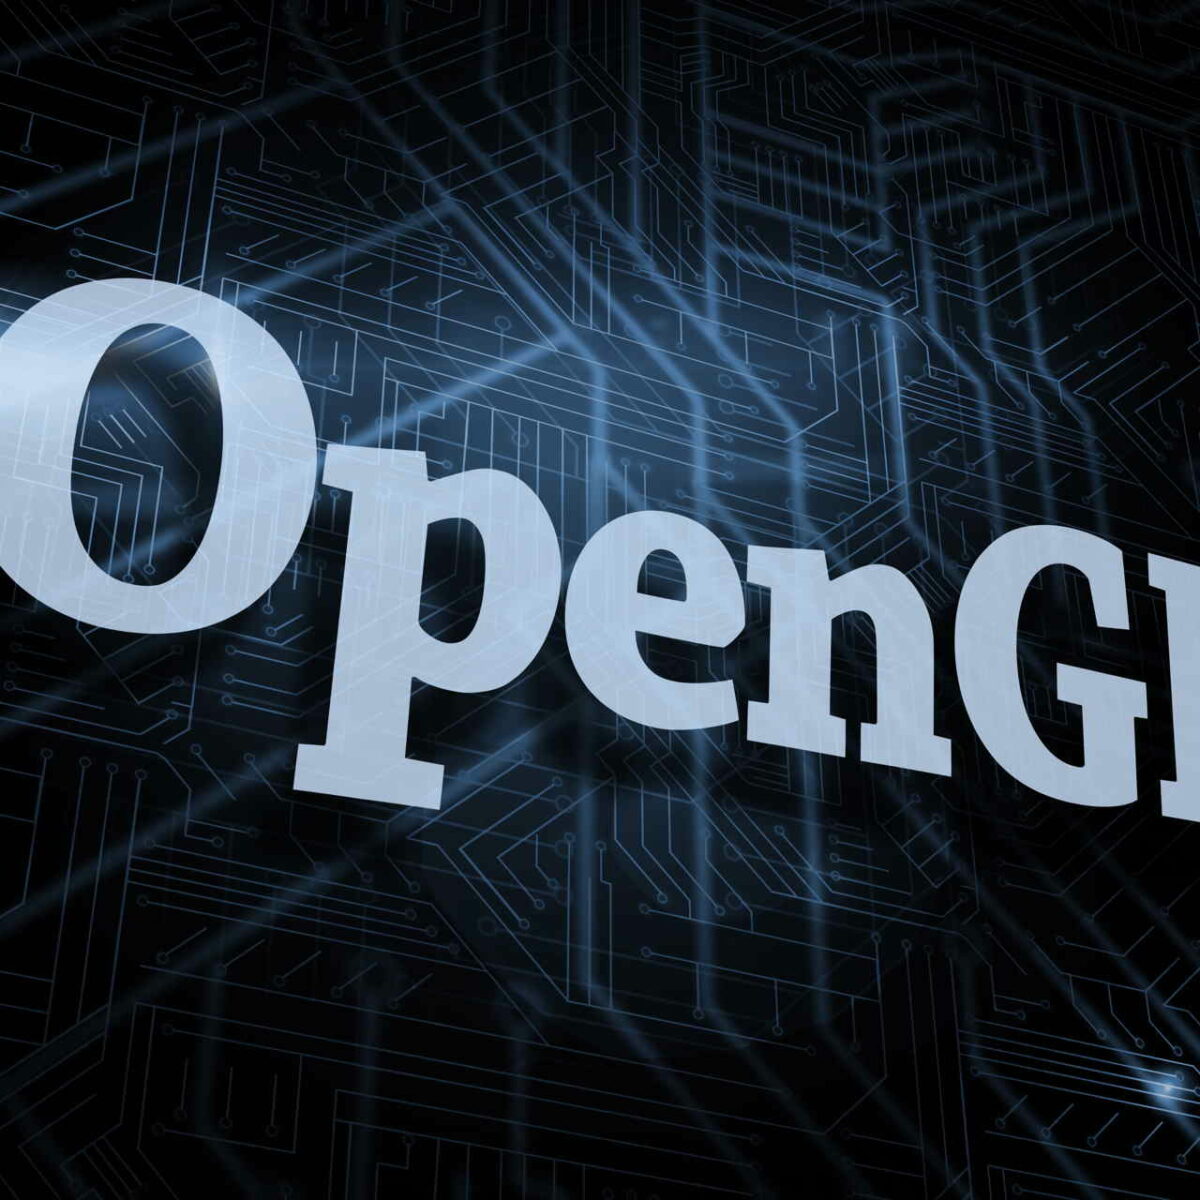 opengl 2.0 install windows 7